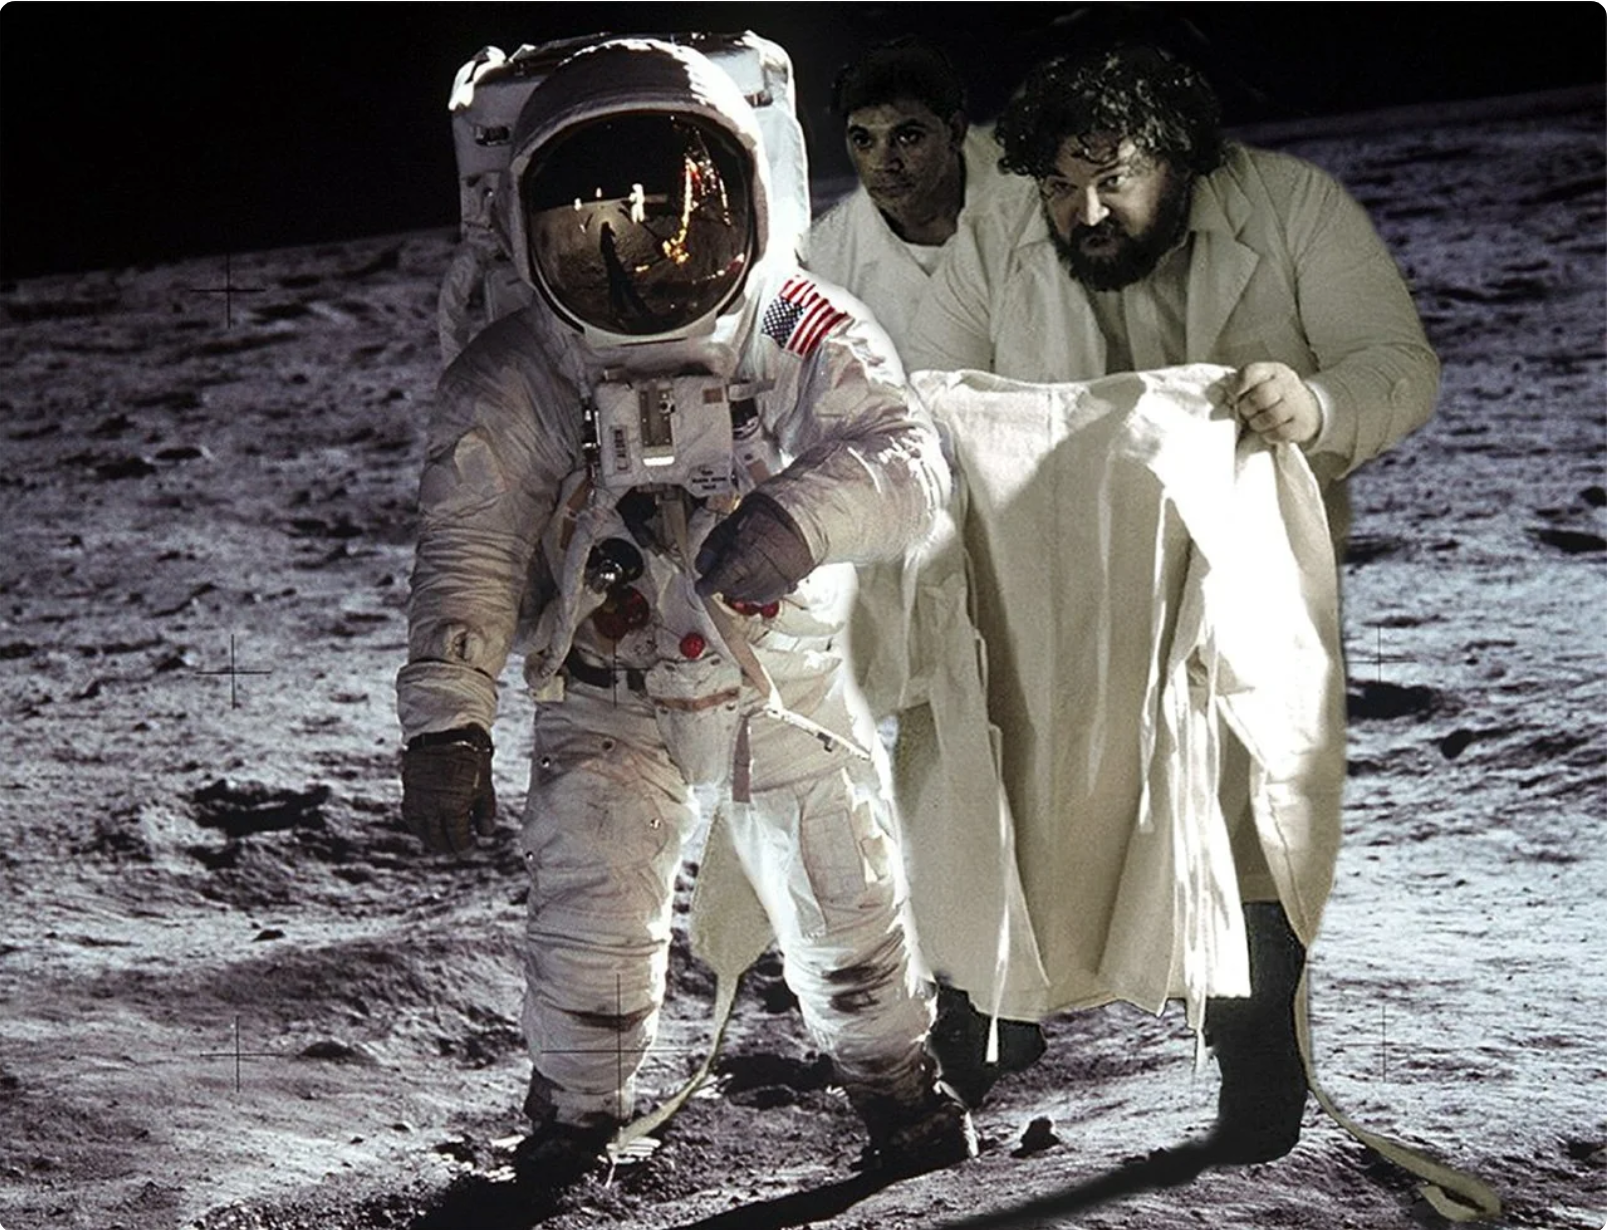 The astronauts on the moon. Дарт Вейдер на Луне. Американцы на Луне. Американские астронавты на Луне.